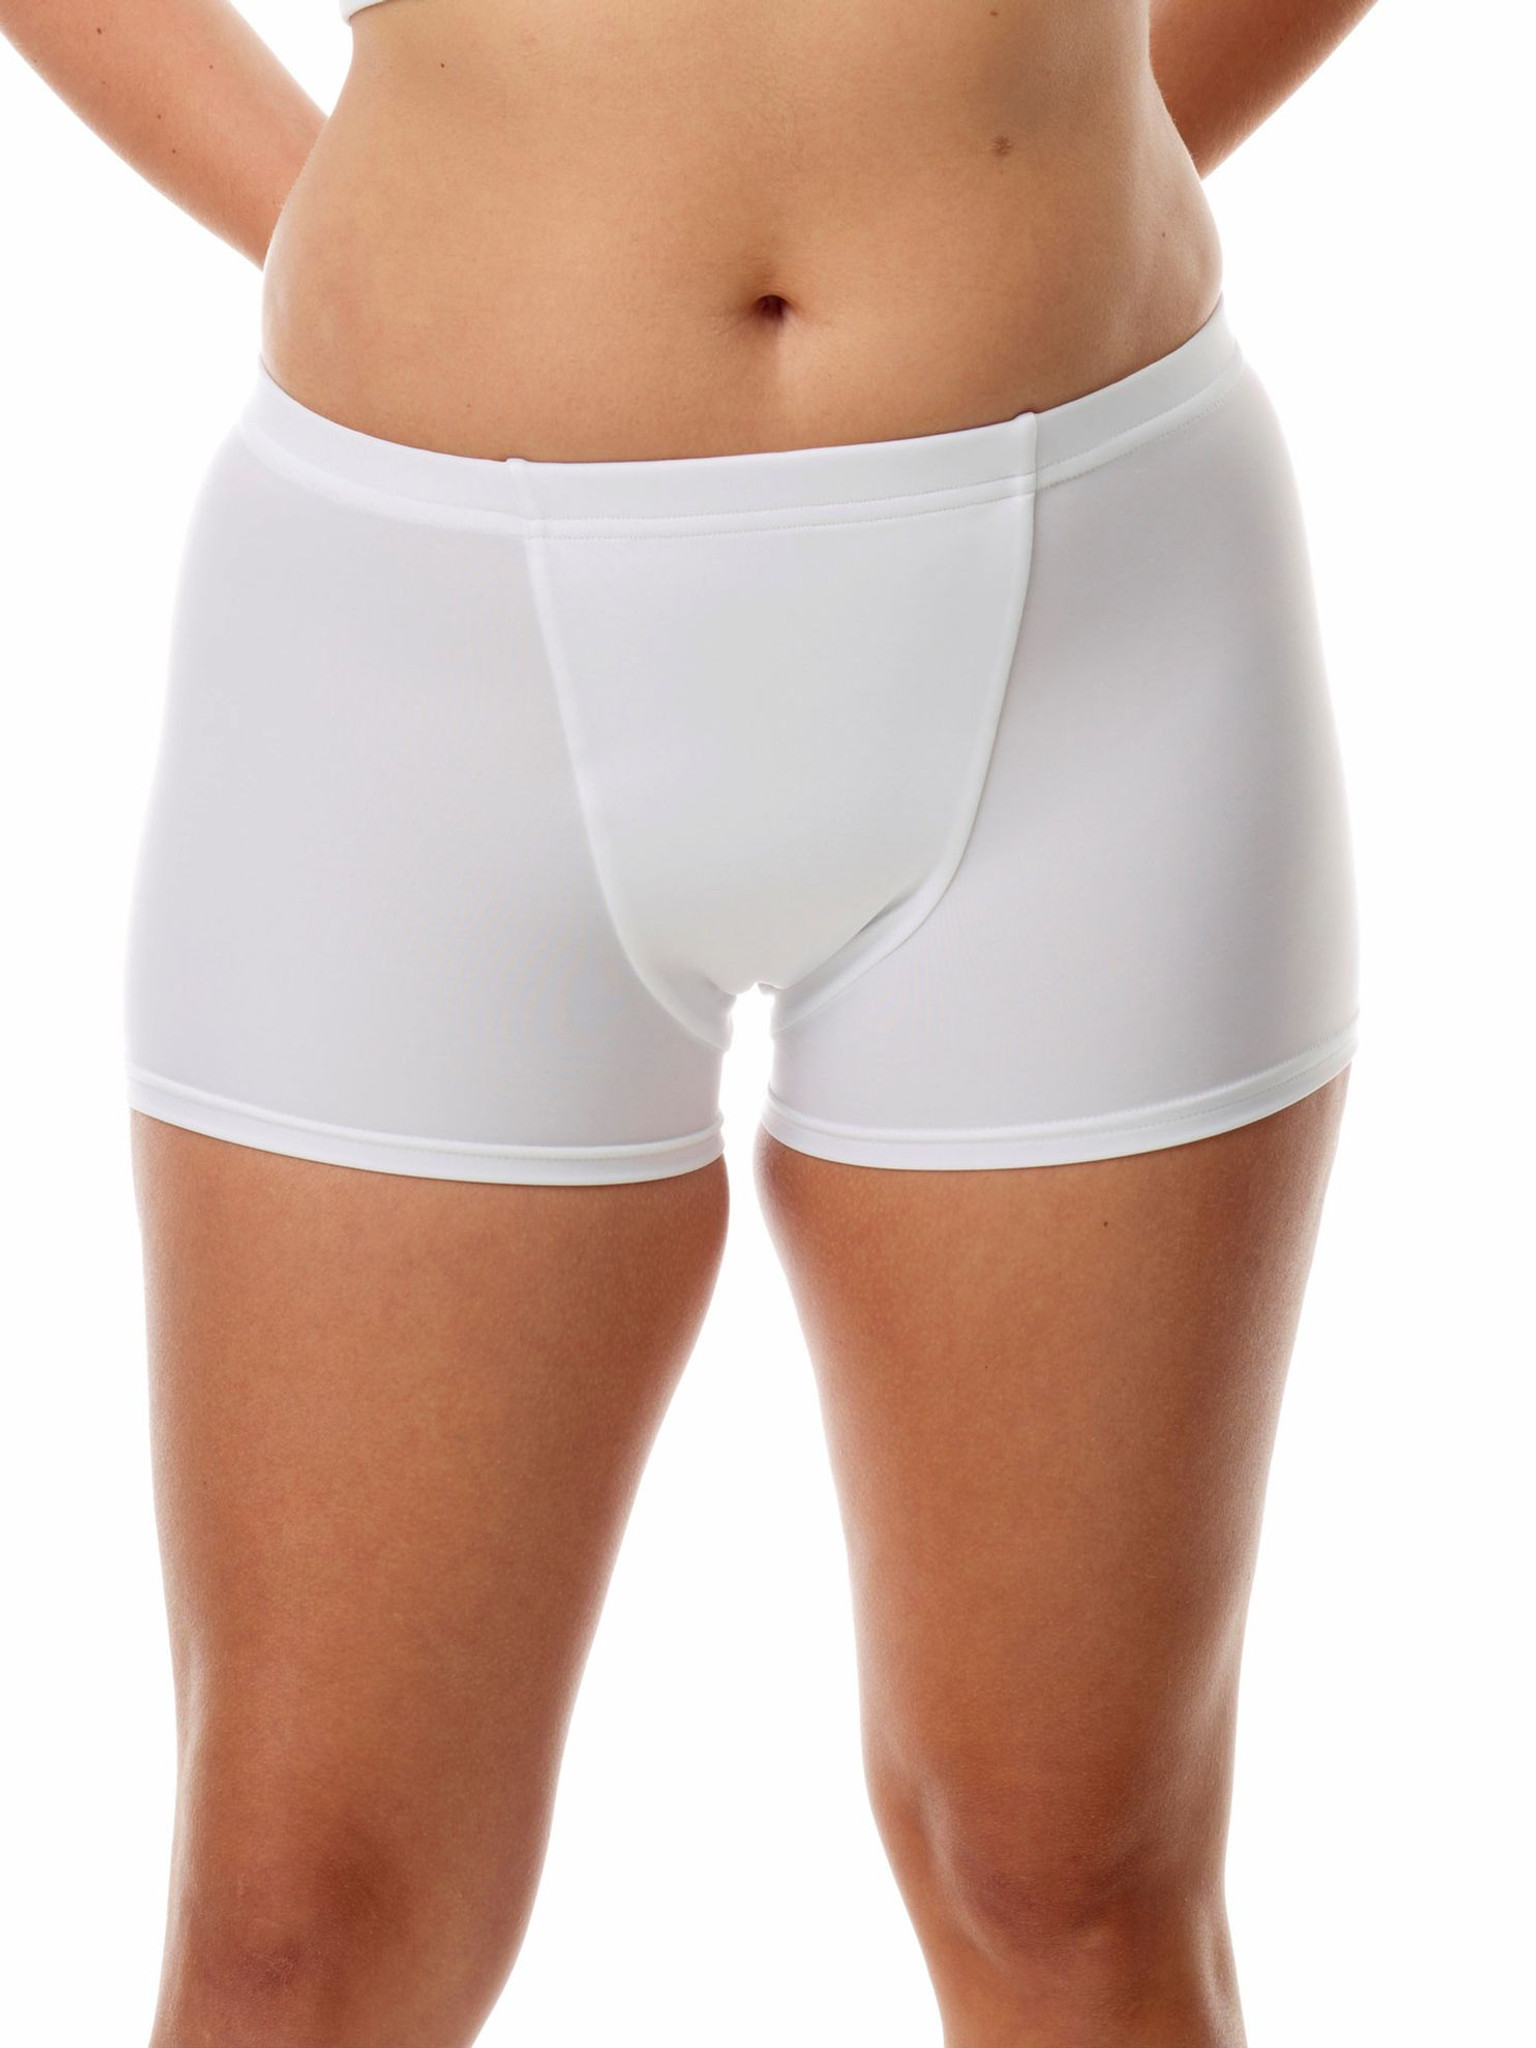 Women's White Compression Shorts